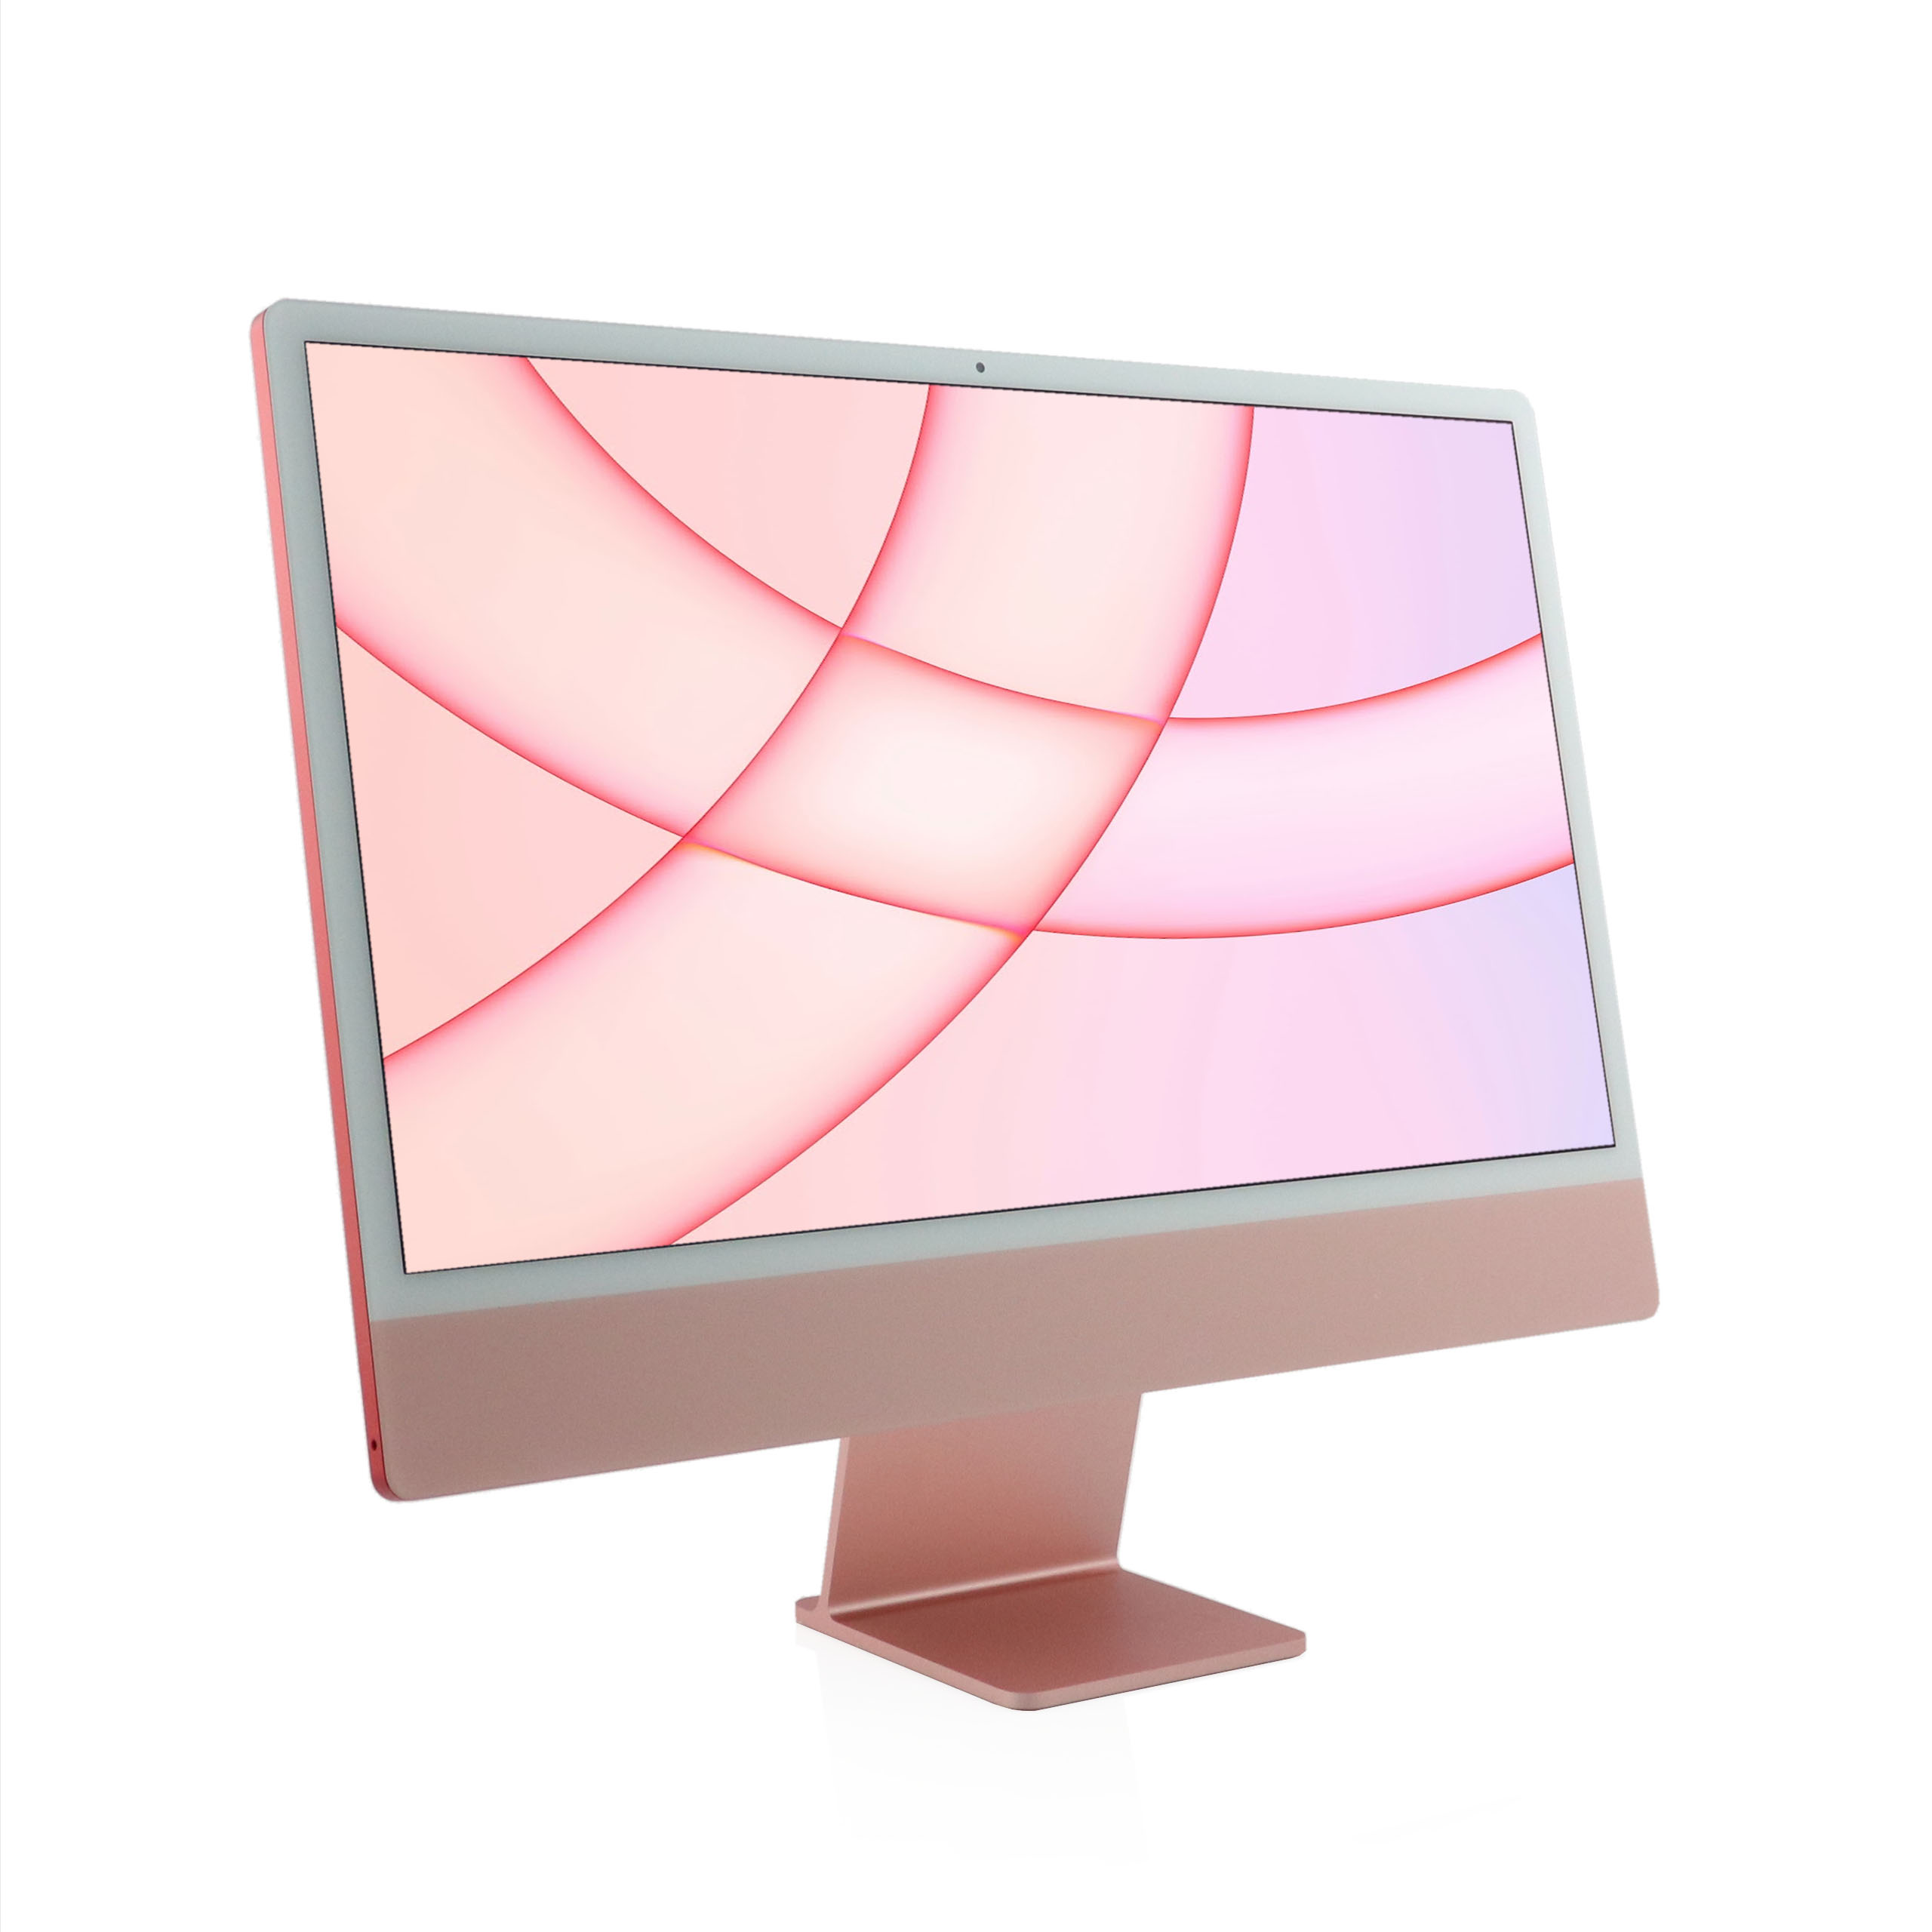 2021 Apple iMac 4.5K 24-inch (2-port) M1 8GB 256GB - Pink - 